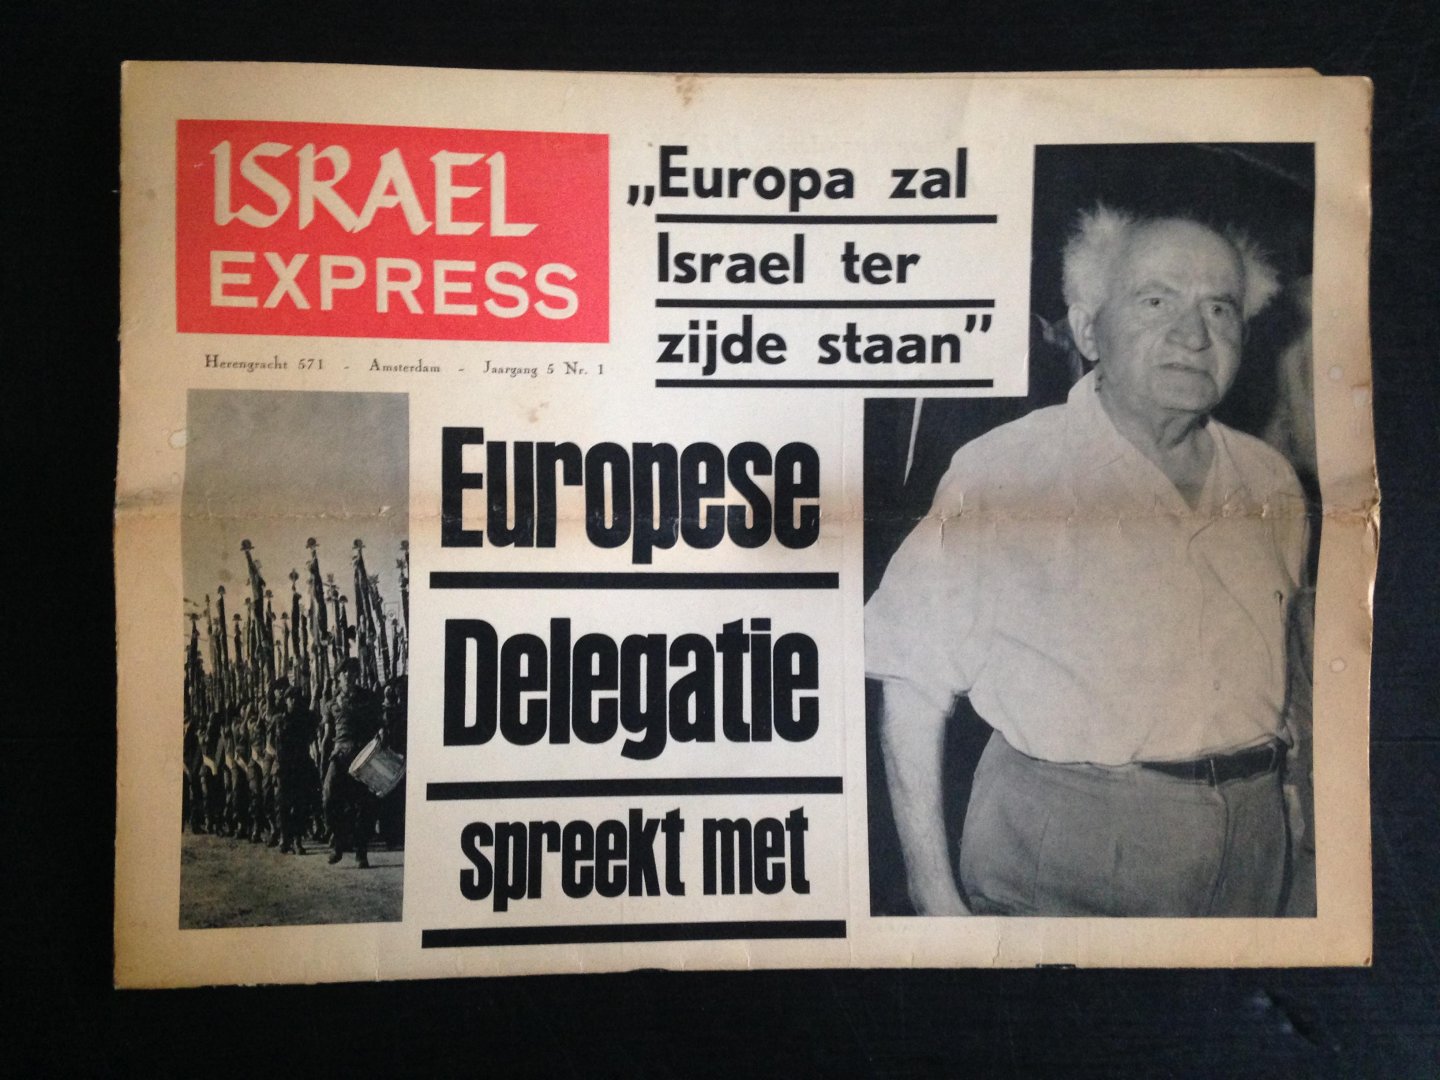  - Europa zal Israel terzijde staan, Exemplaar Krant Israel Express, Amsterdam